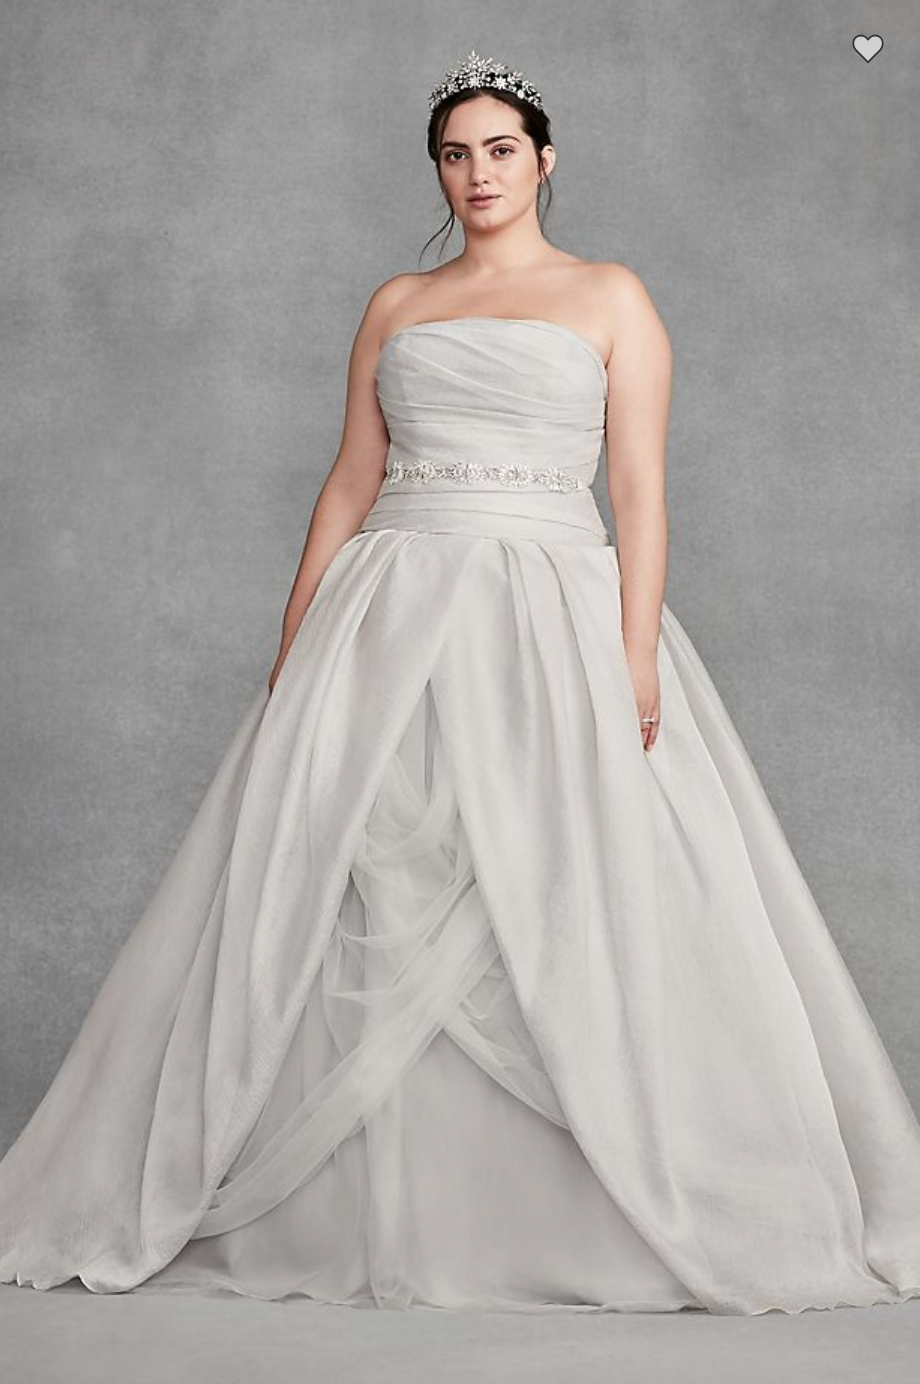 silver white wedding dress